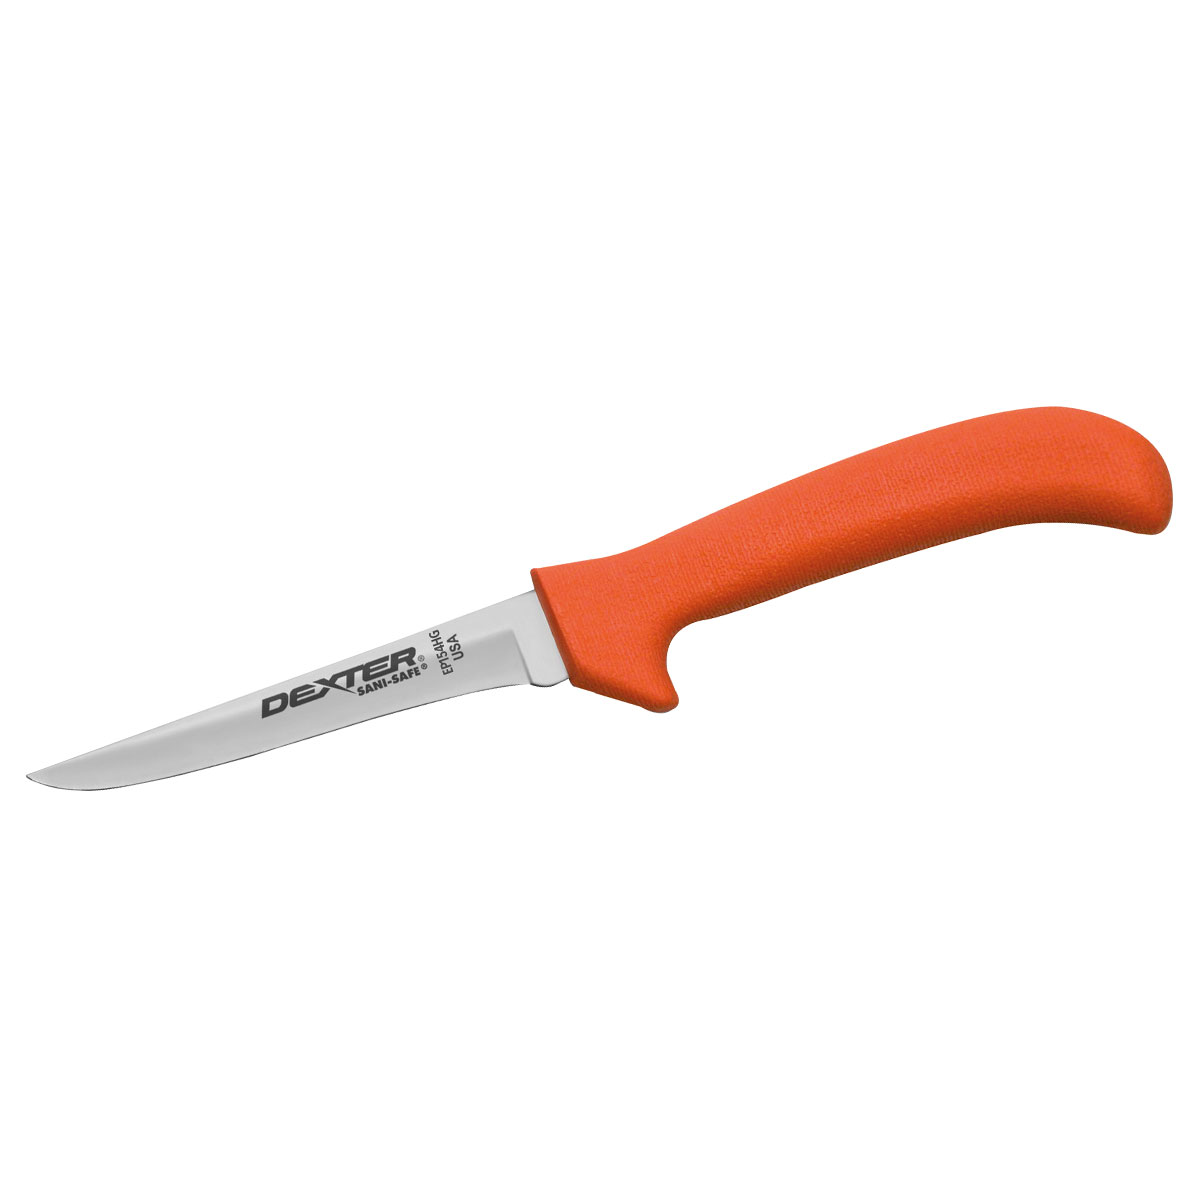 Dexter Poultry Boning Knife, 11cm (4 1/2) - Ergonomic Grip - Orange